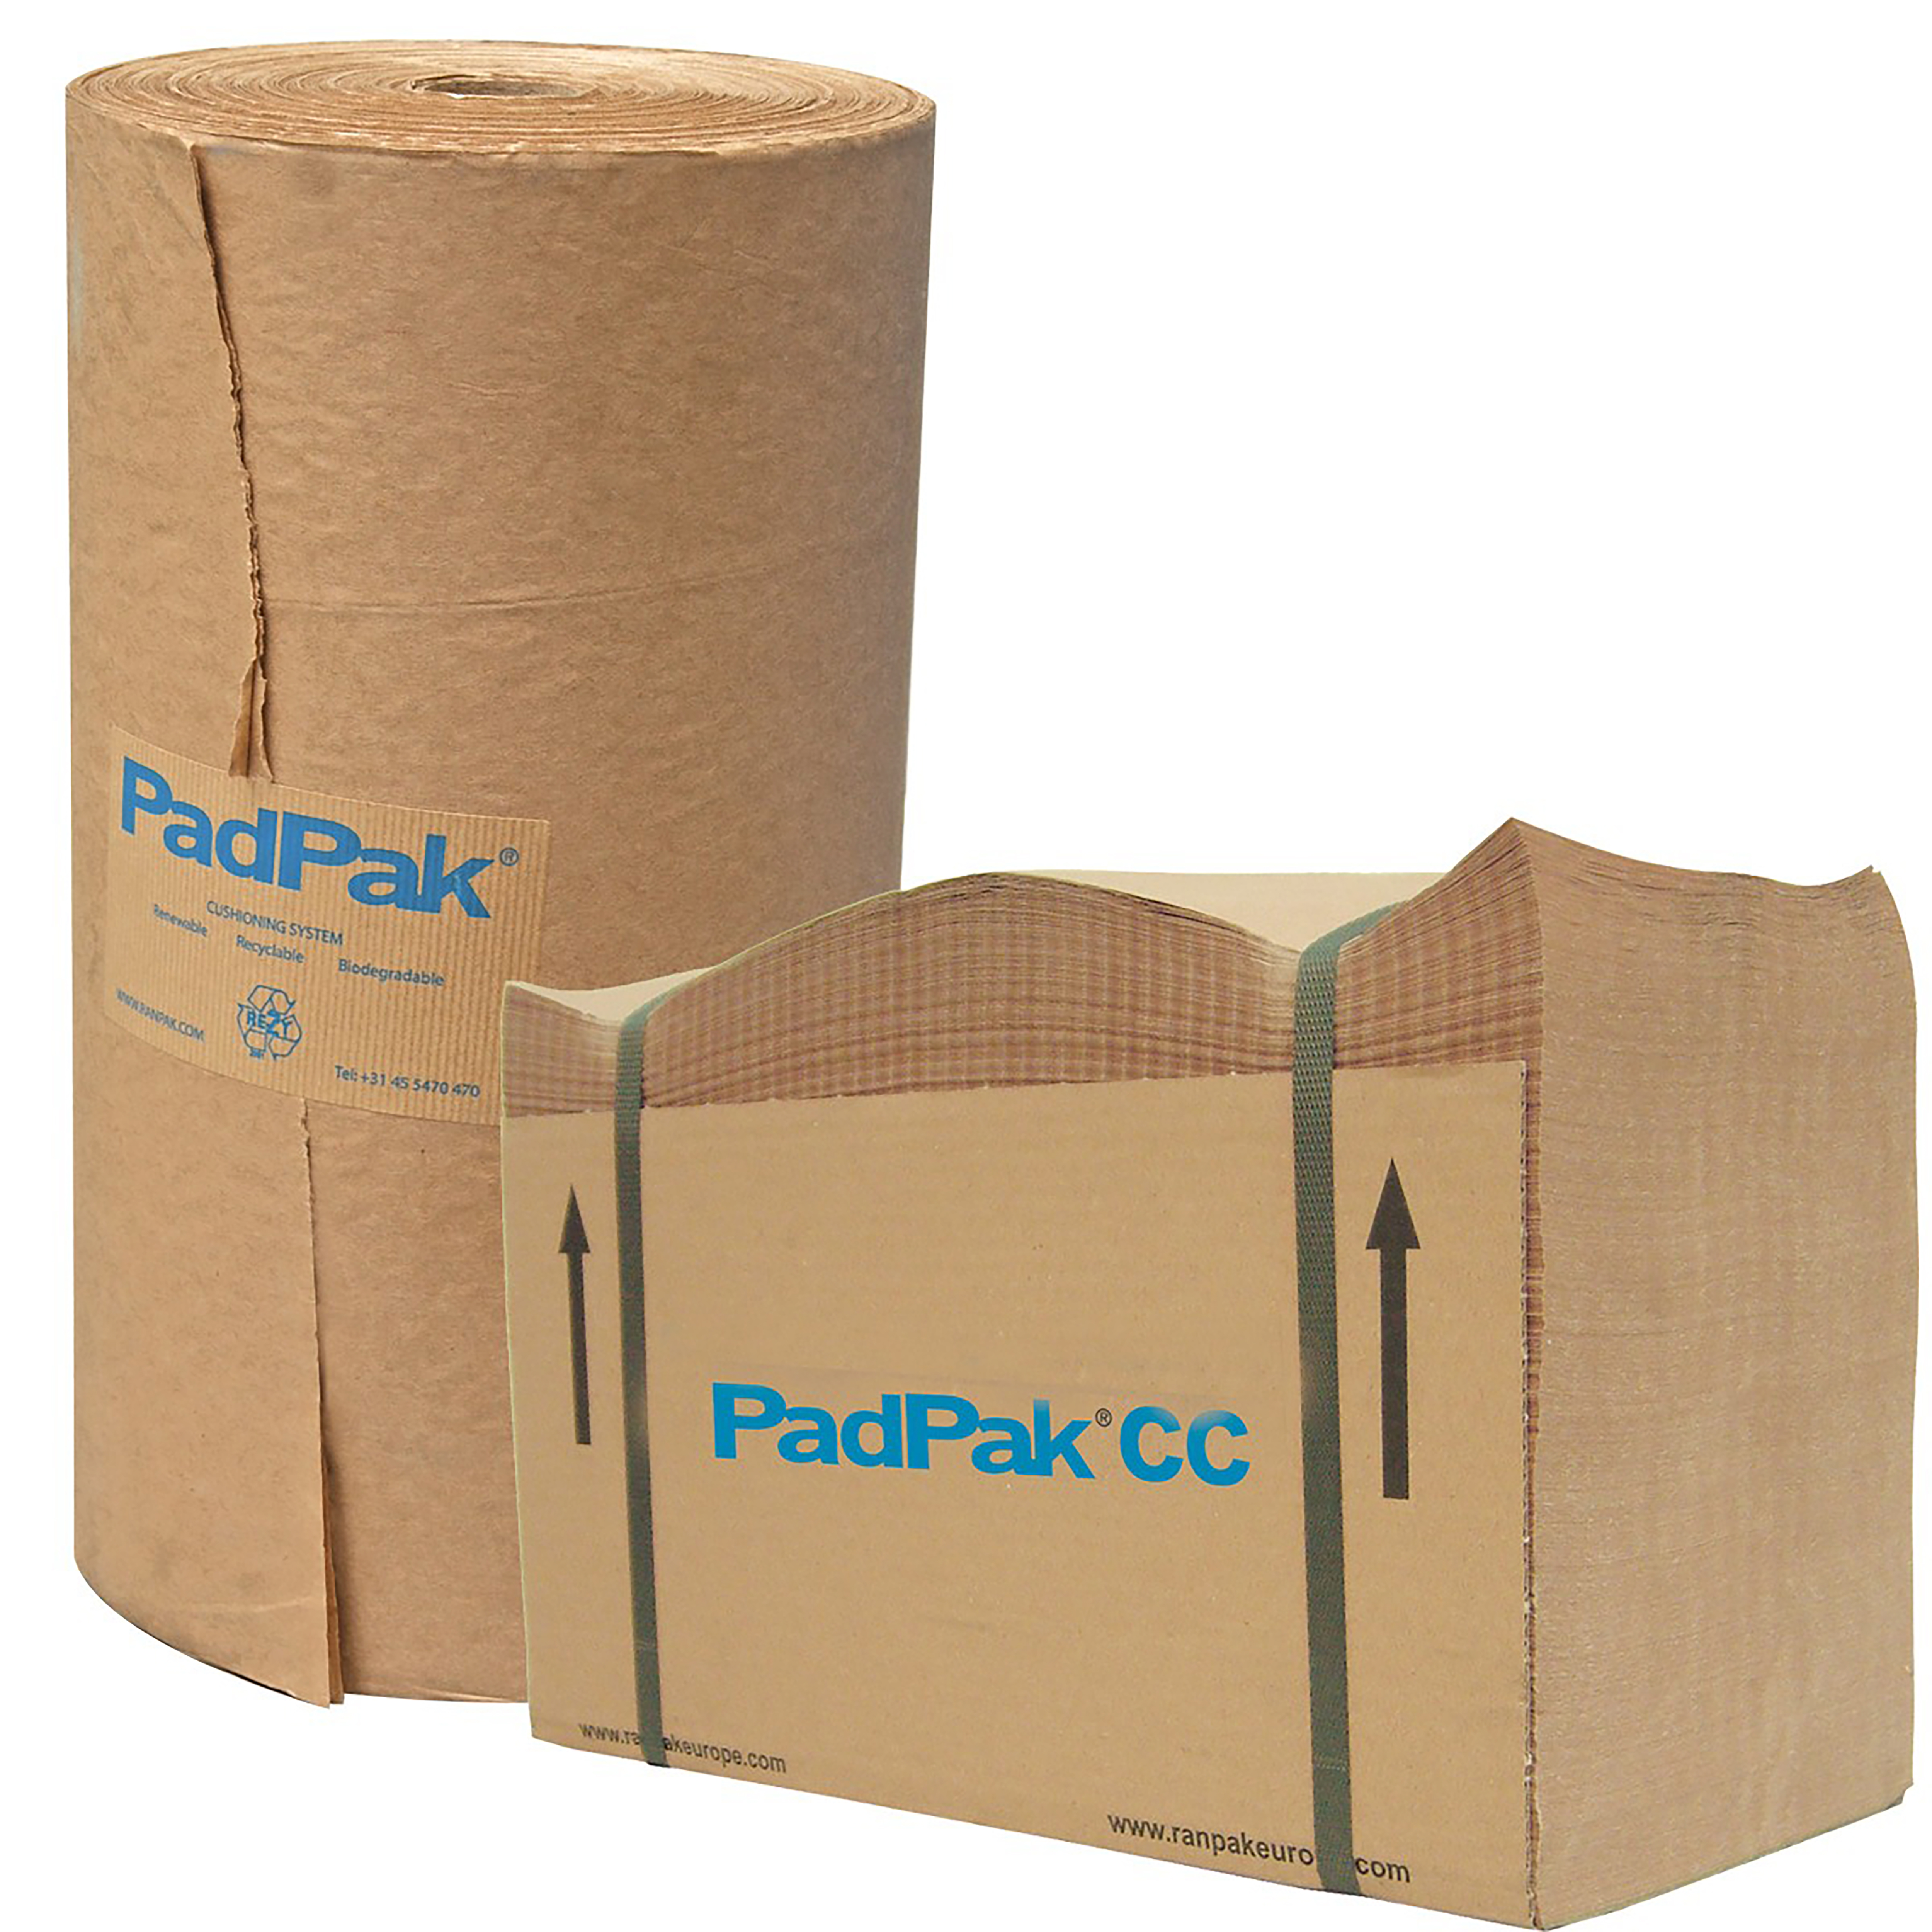 PadPak Compact calage detail 4